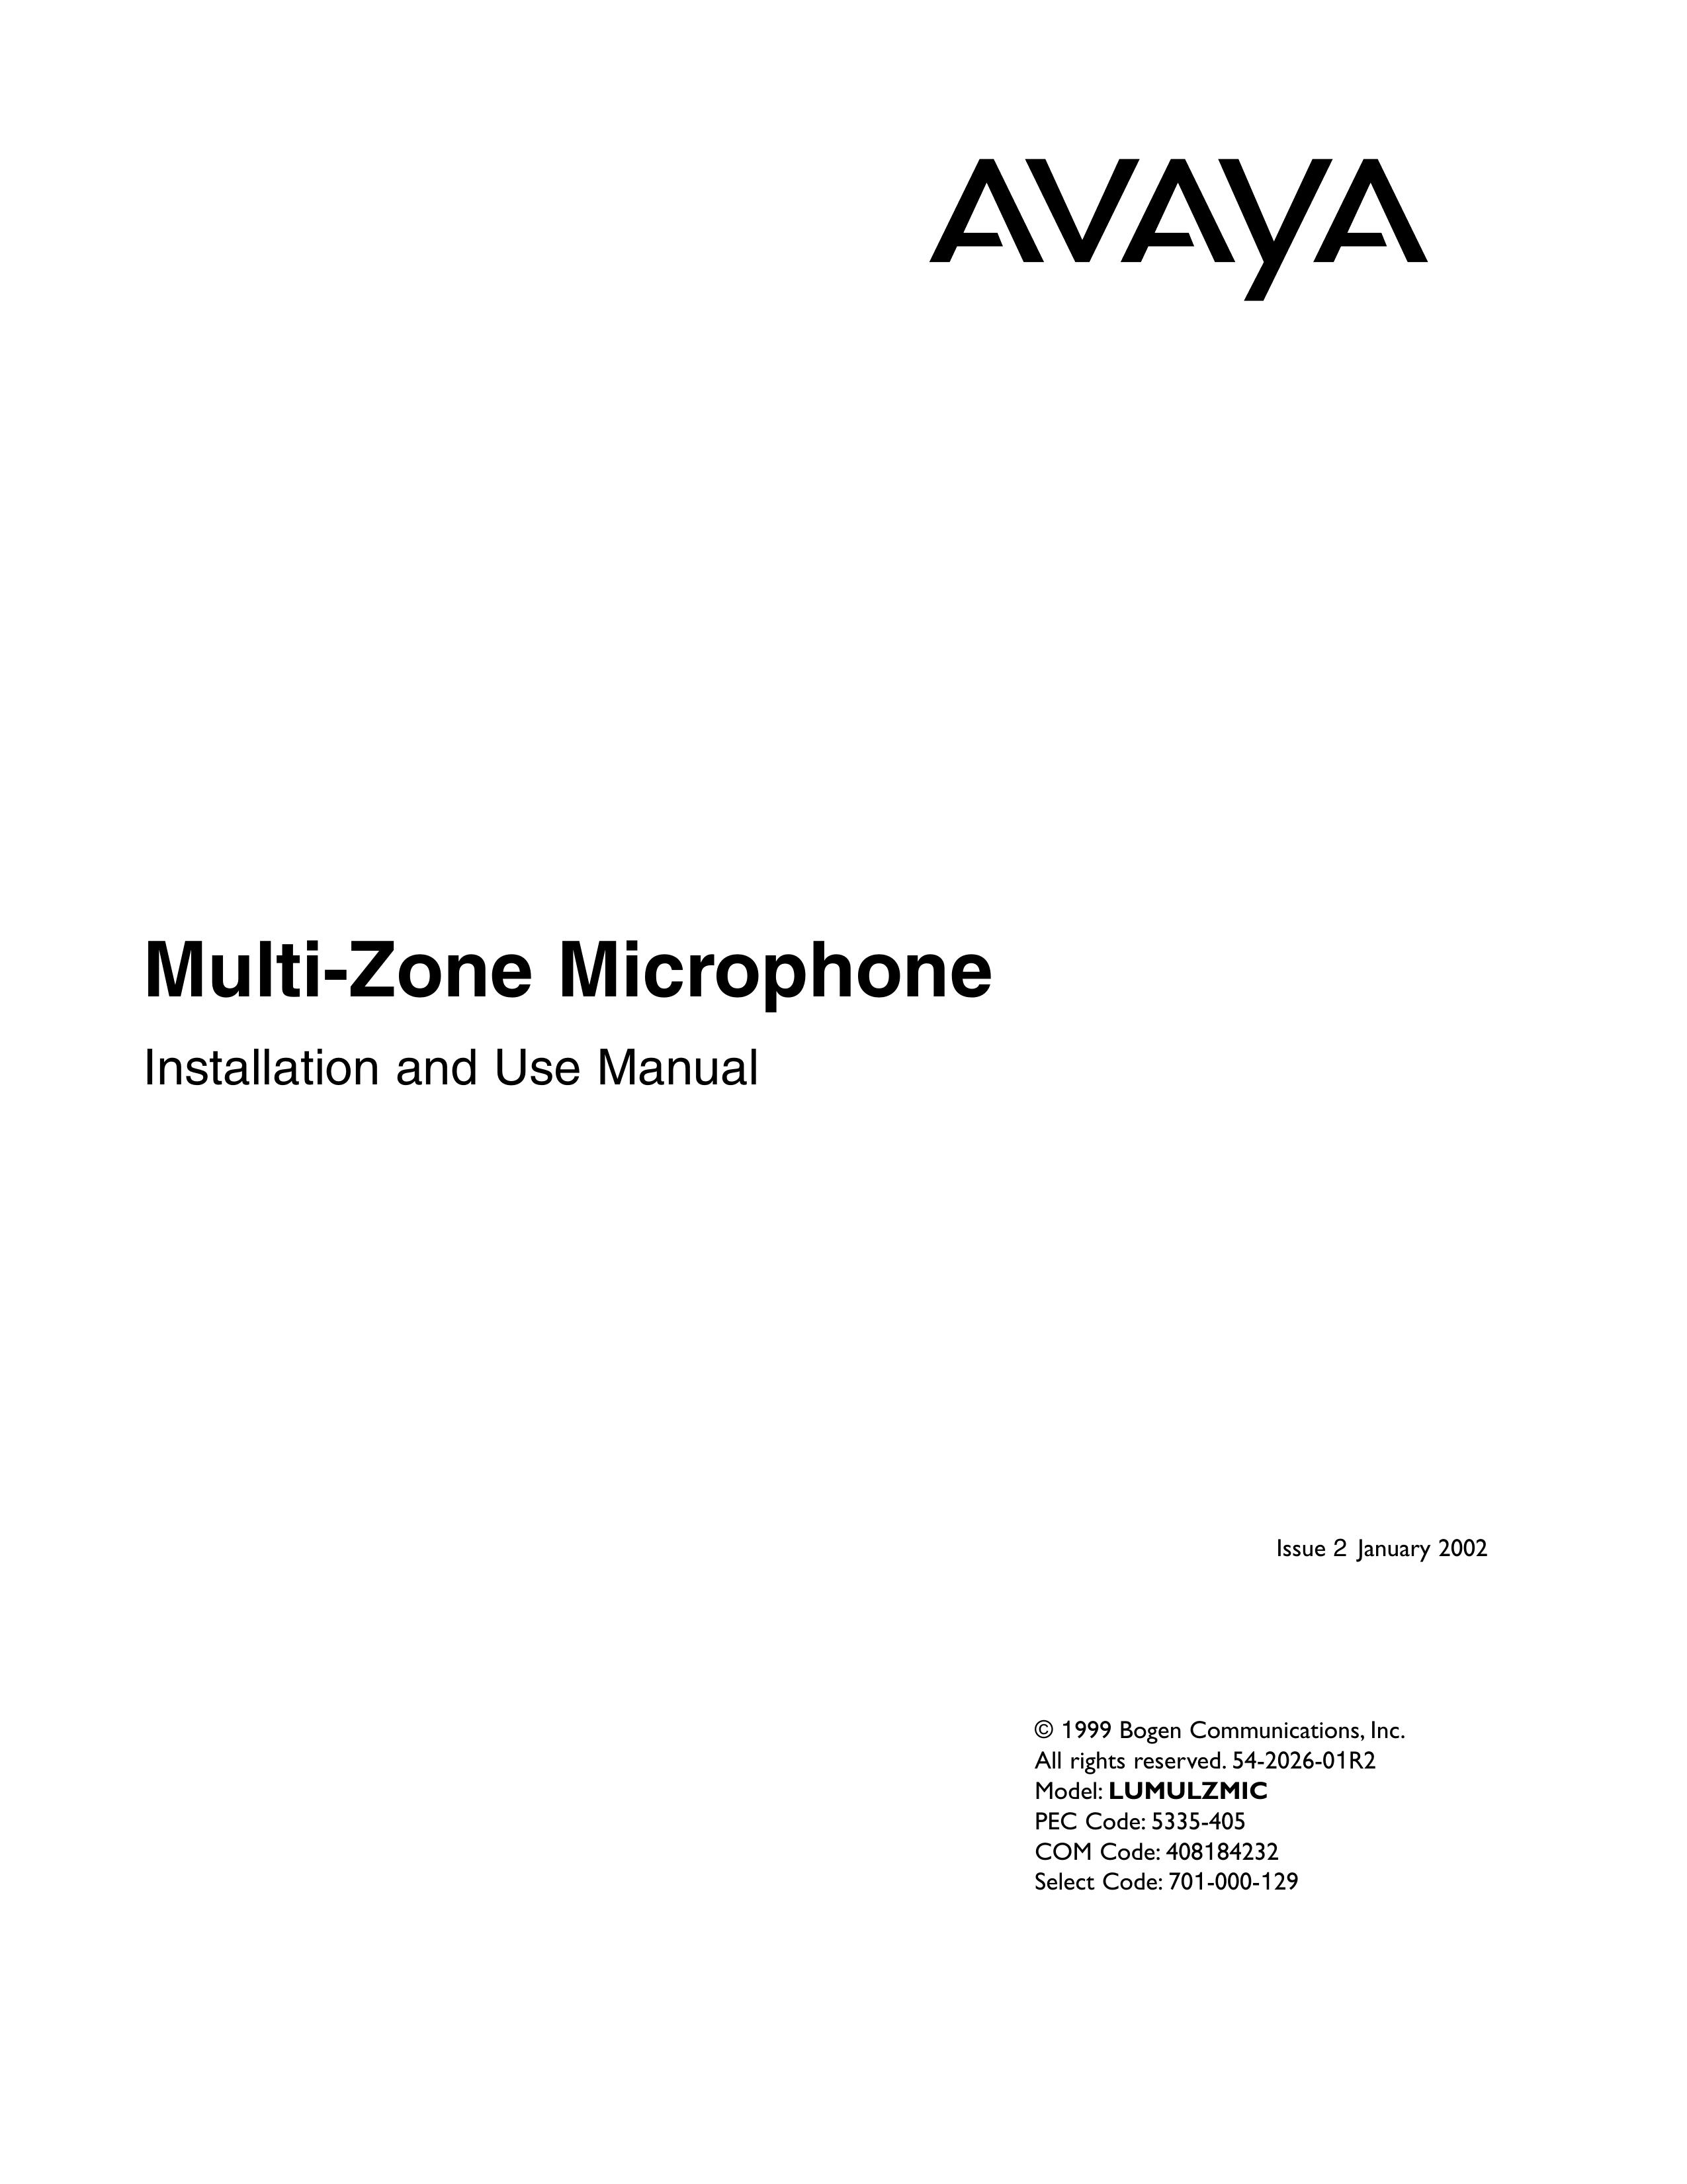 Avaya LUMULZMIC Microphone User Manual